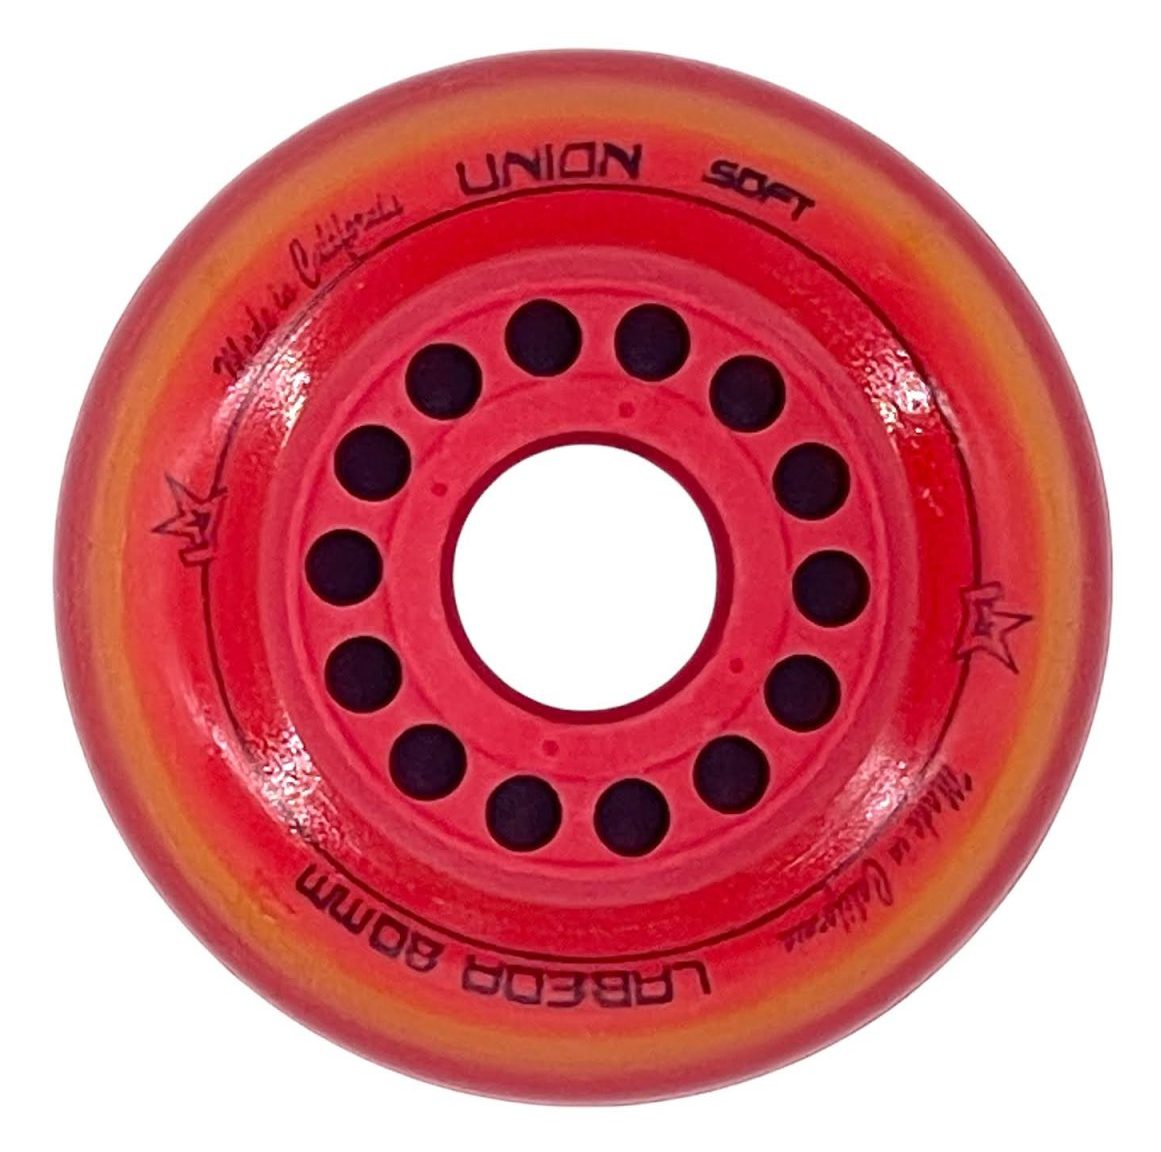 Labeda Roller Hockey Wheel Union Soft – Red Blem